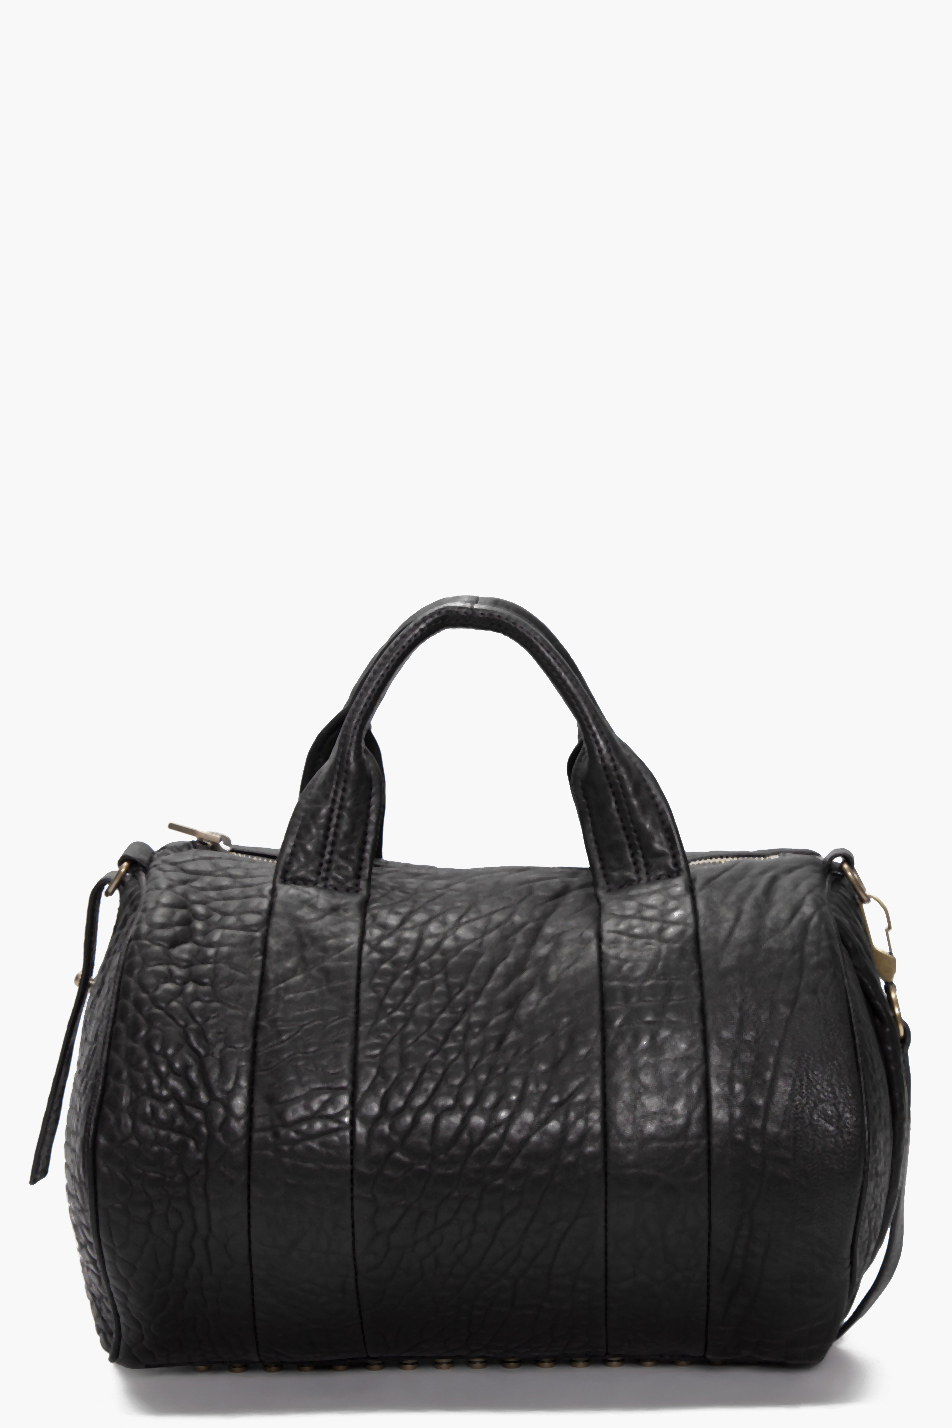 Alexander Wang Rocco Mini Duffle Leather Bag in Black - Lyst